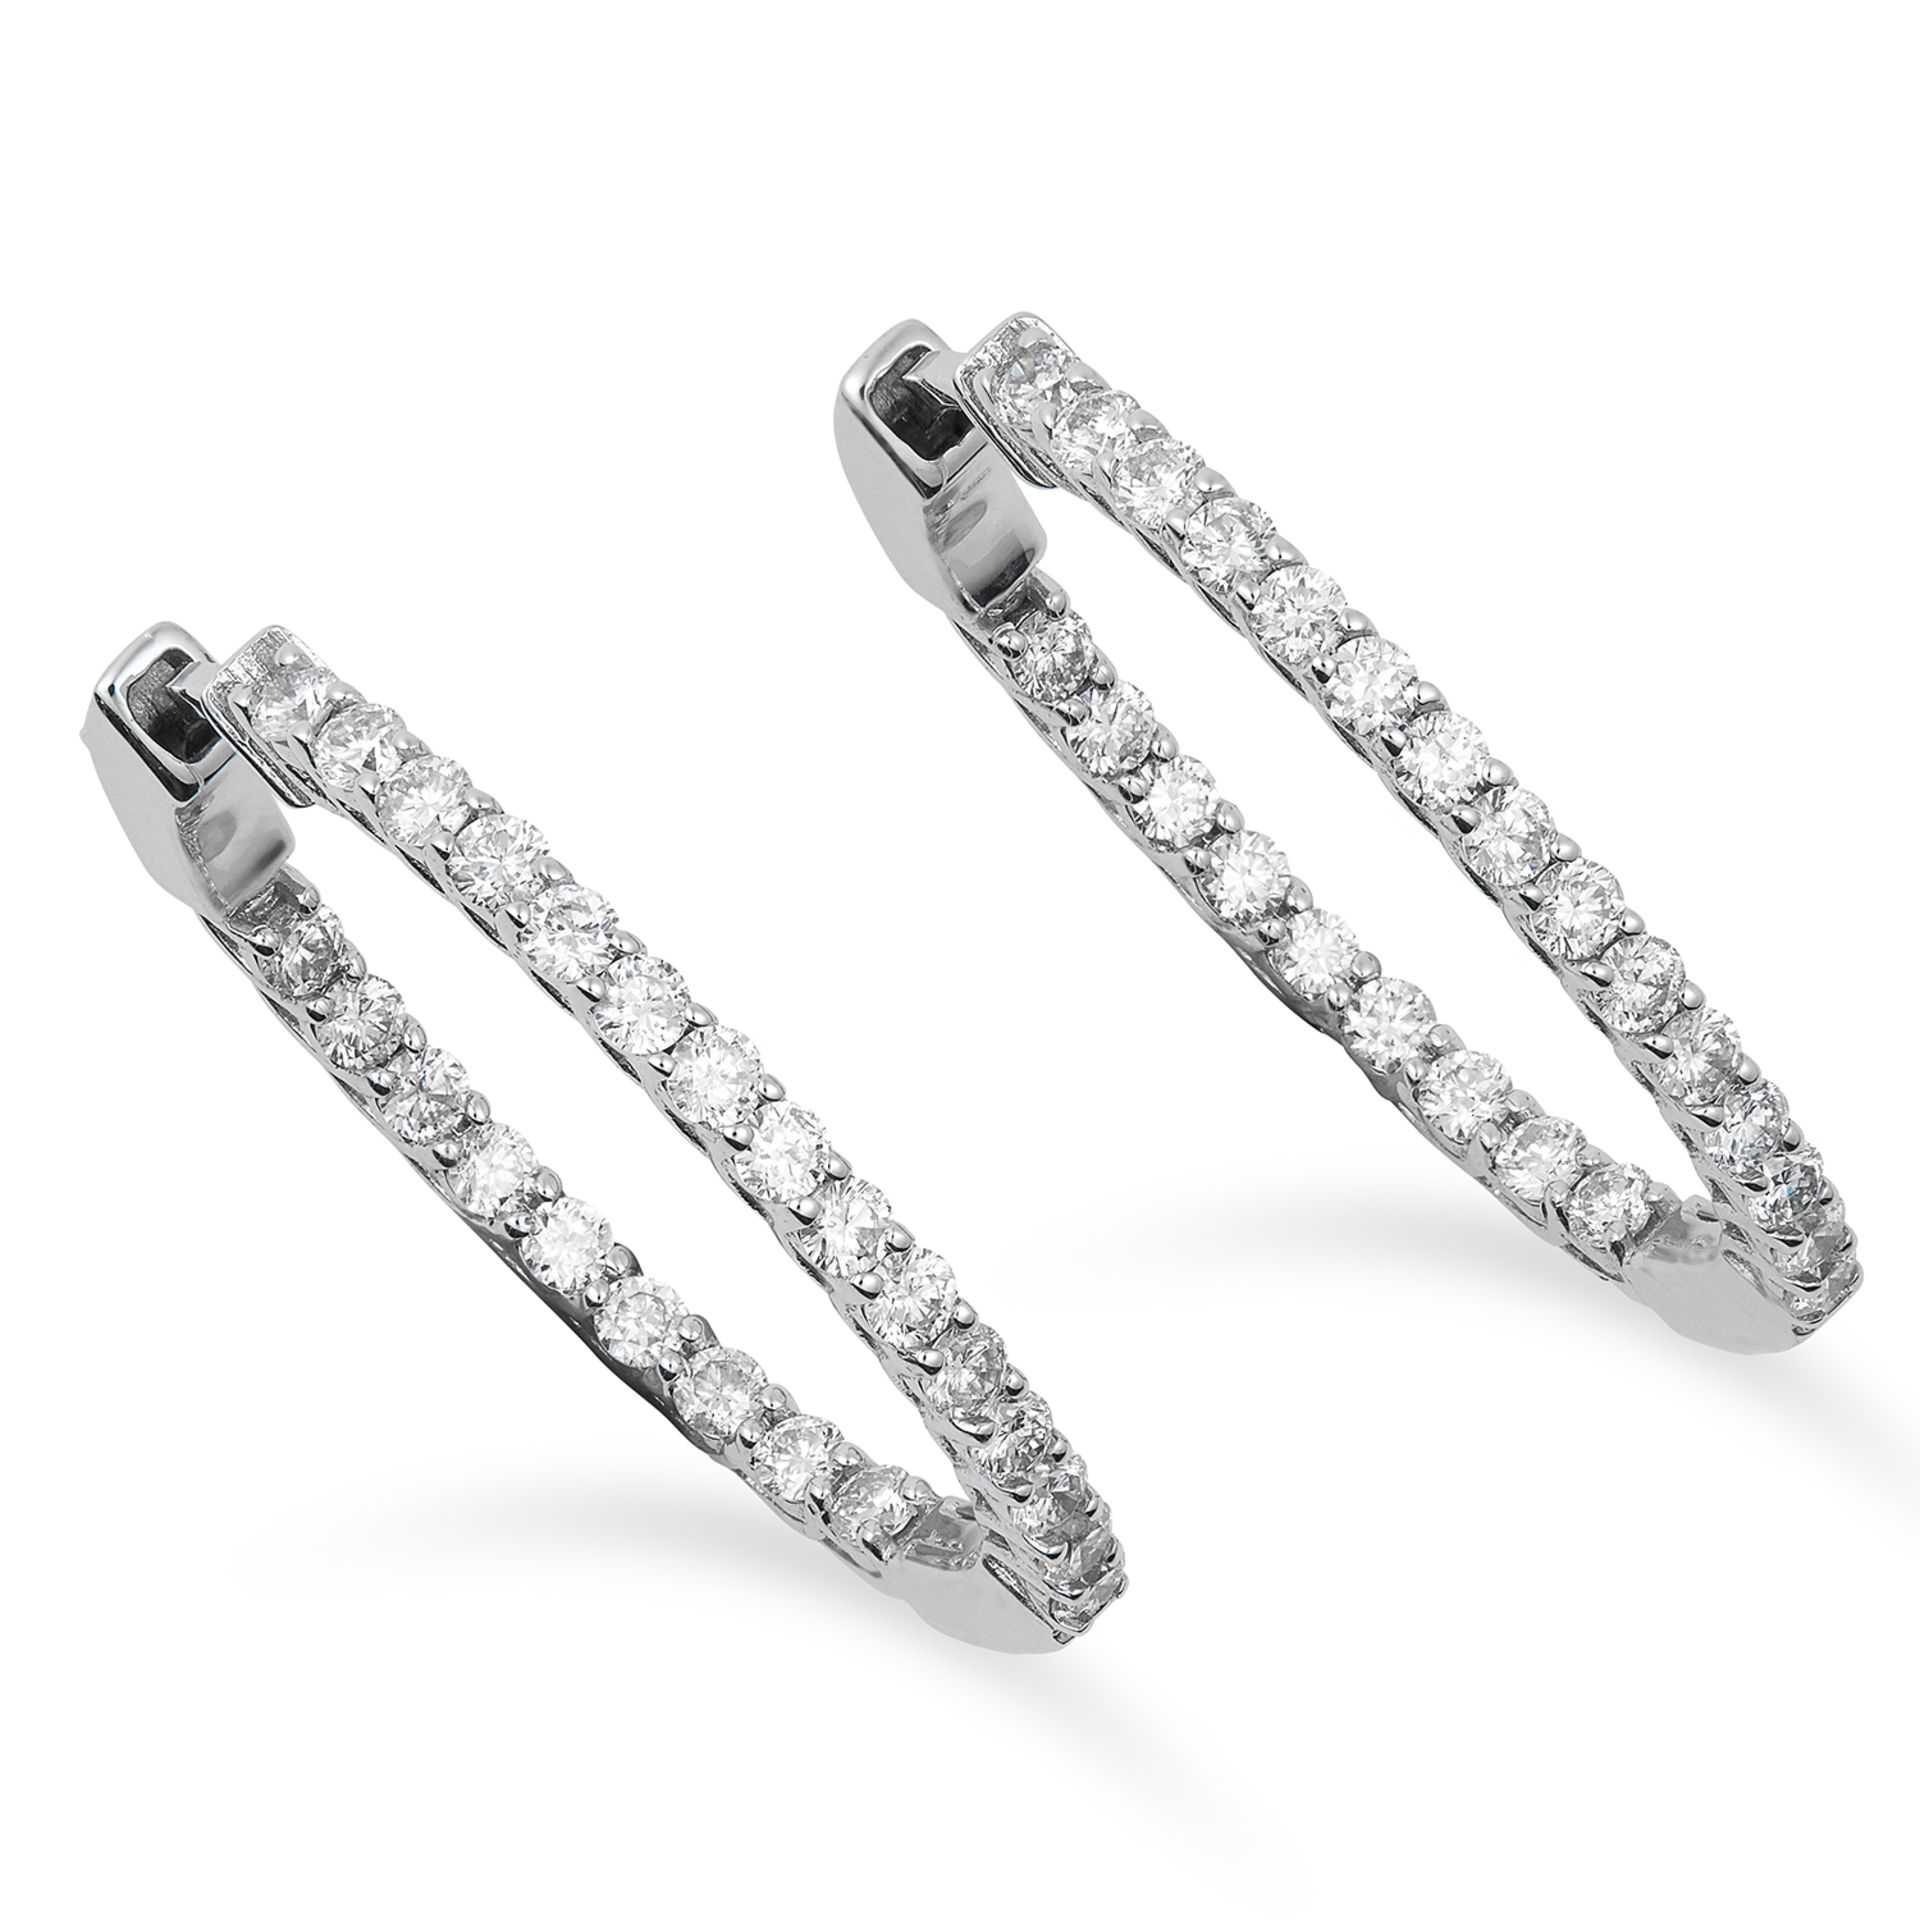 DIAMOND HOOP EARRINGS, set with round cut diamonds, 2.8cm, 8.4g.